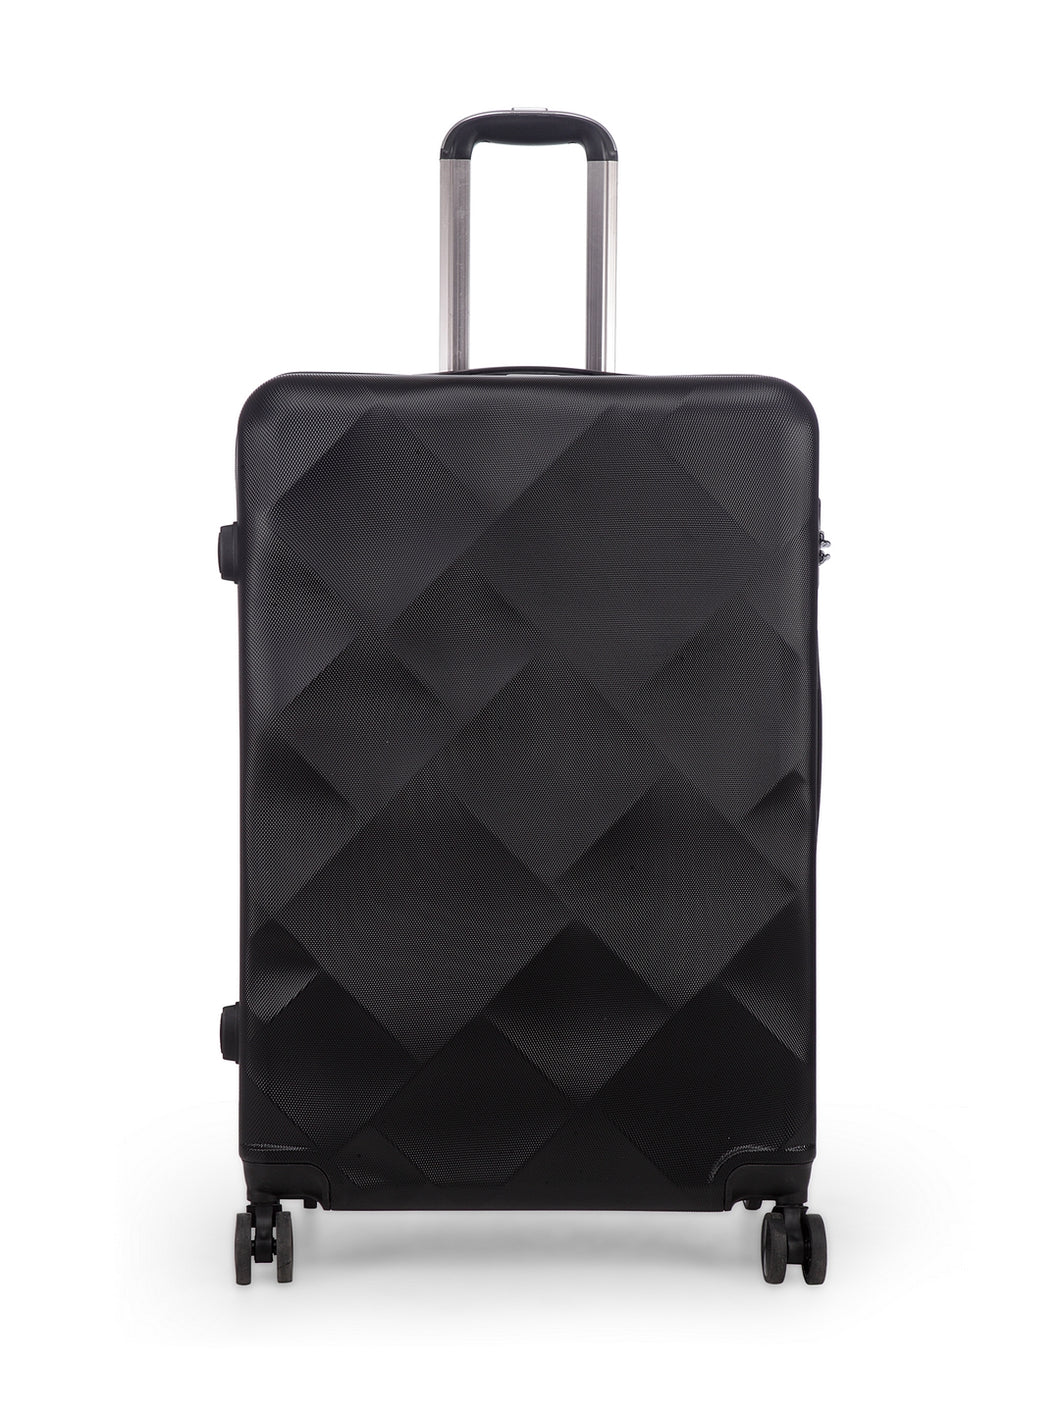 Unisex Black Textured Hard-Sided Large Trolley Suitcase